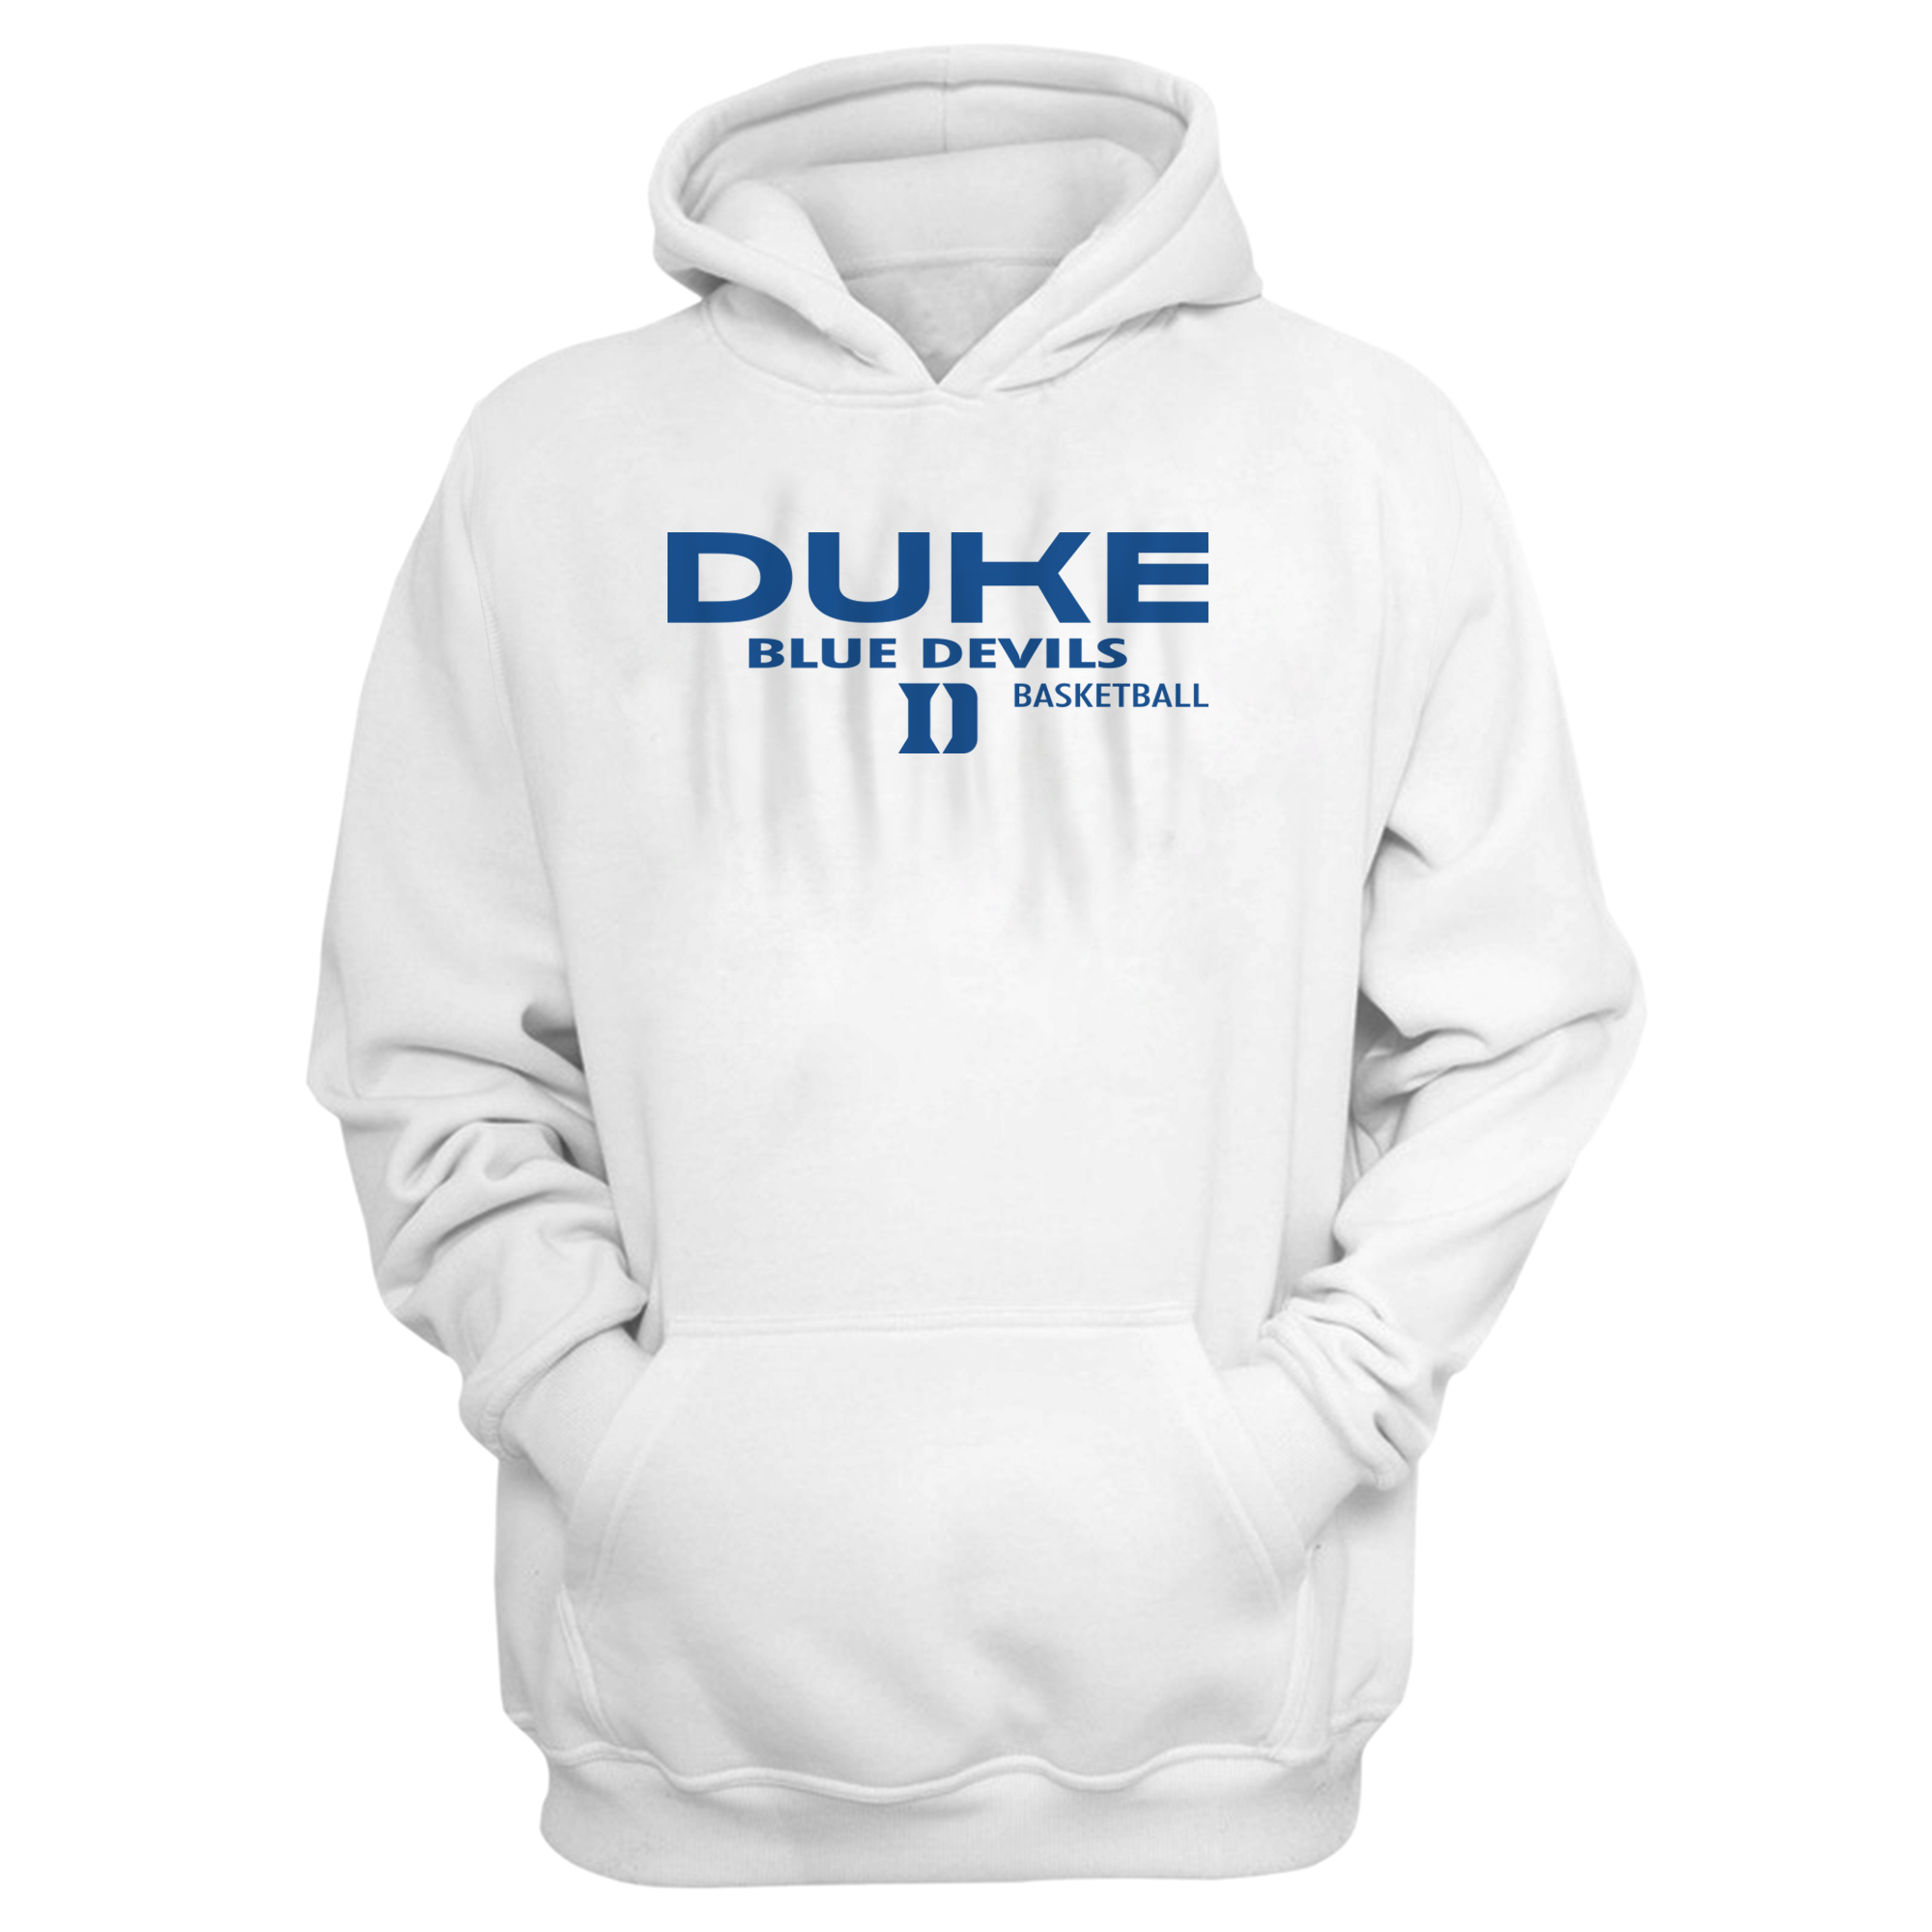 Duke Blue Devils Hoodie (HD-WHT-6002-Duke)